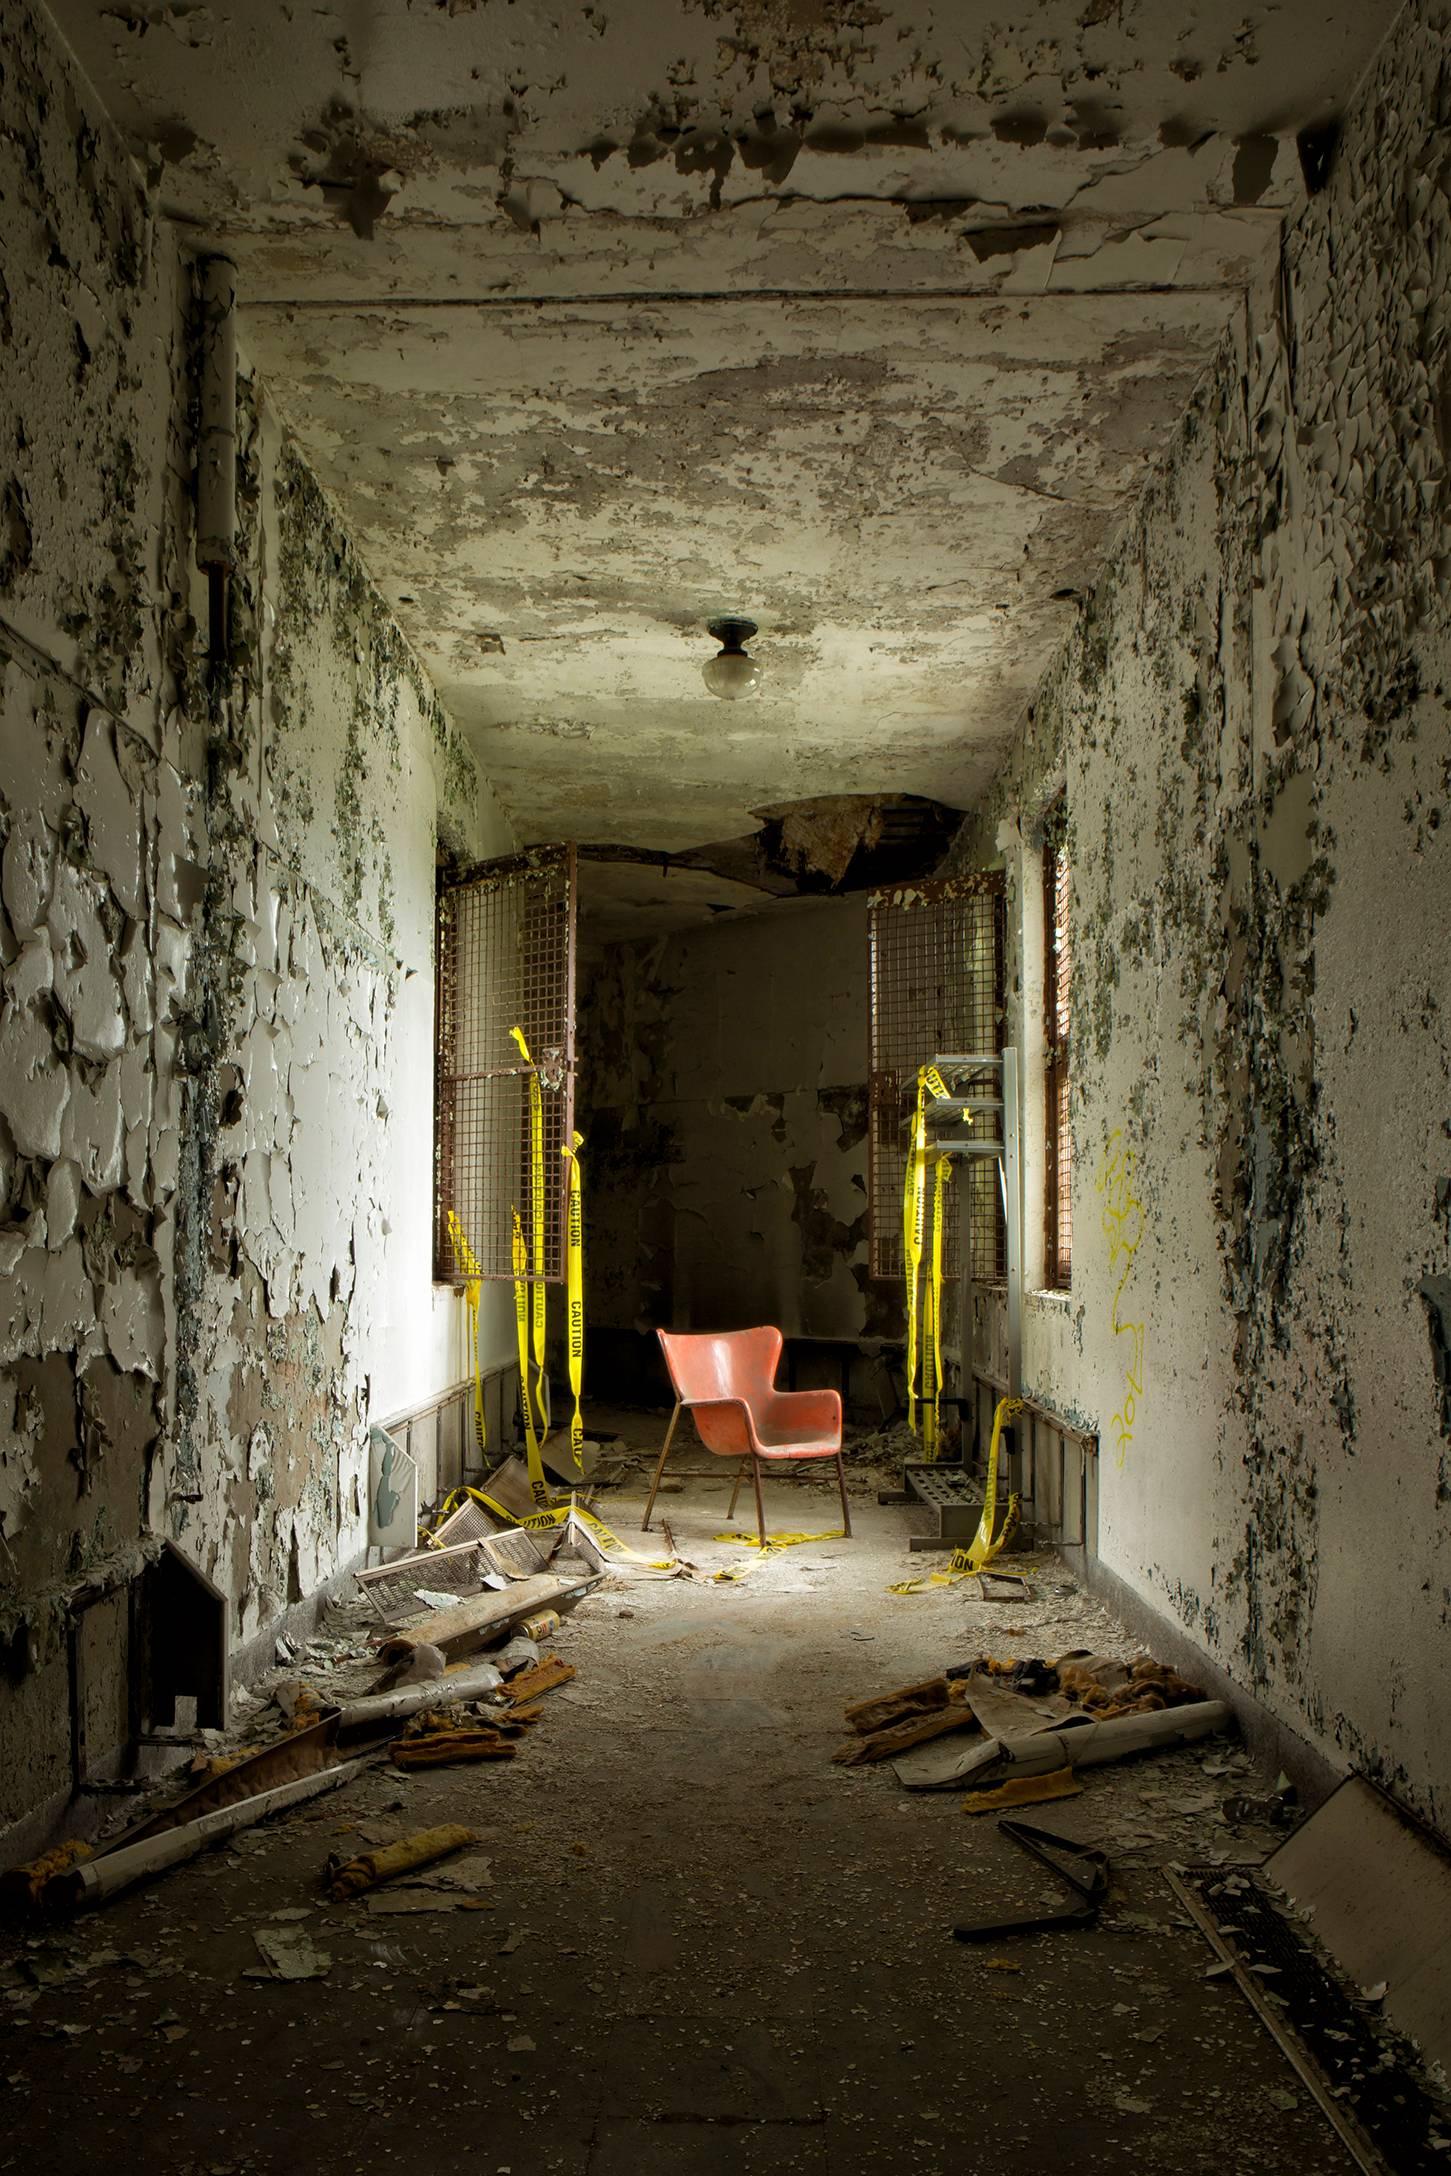 Rebecca Skinner Still-Life Photograph - "Empty", contemporary, abandoned, hallway, chair, orange, color photo, print